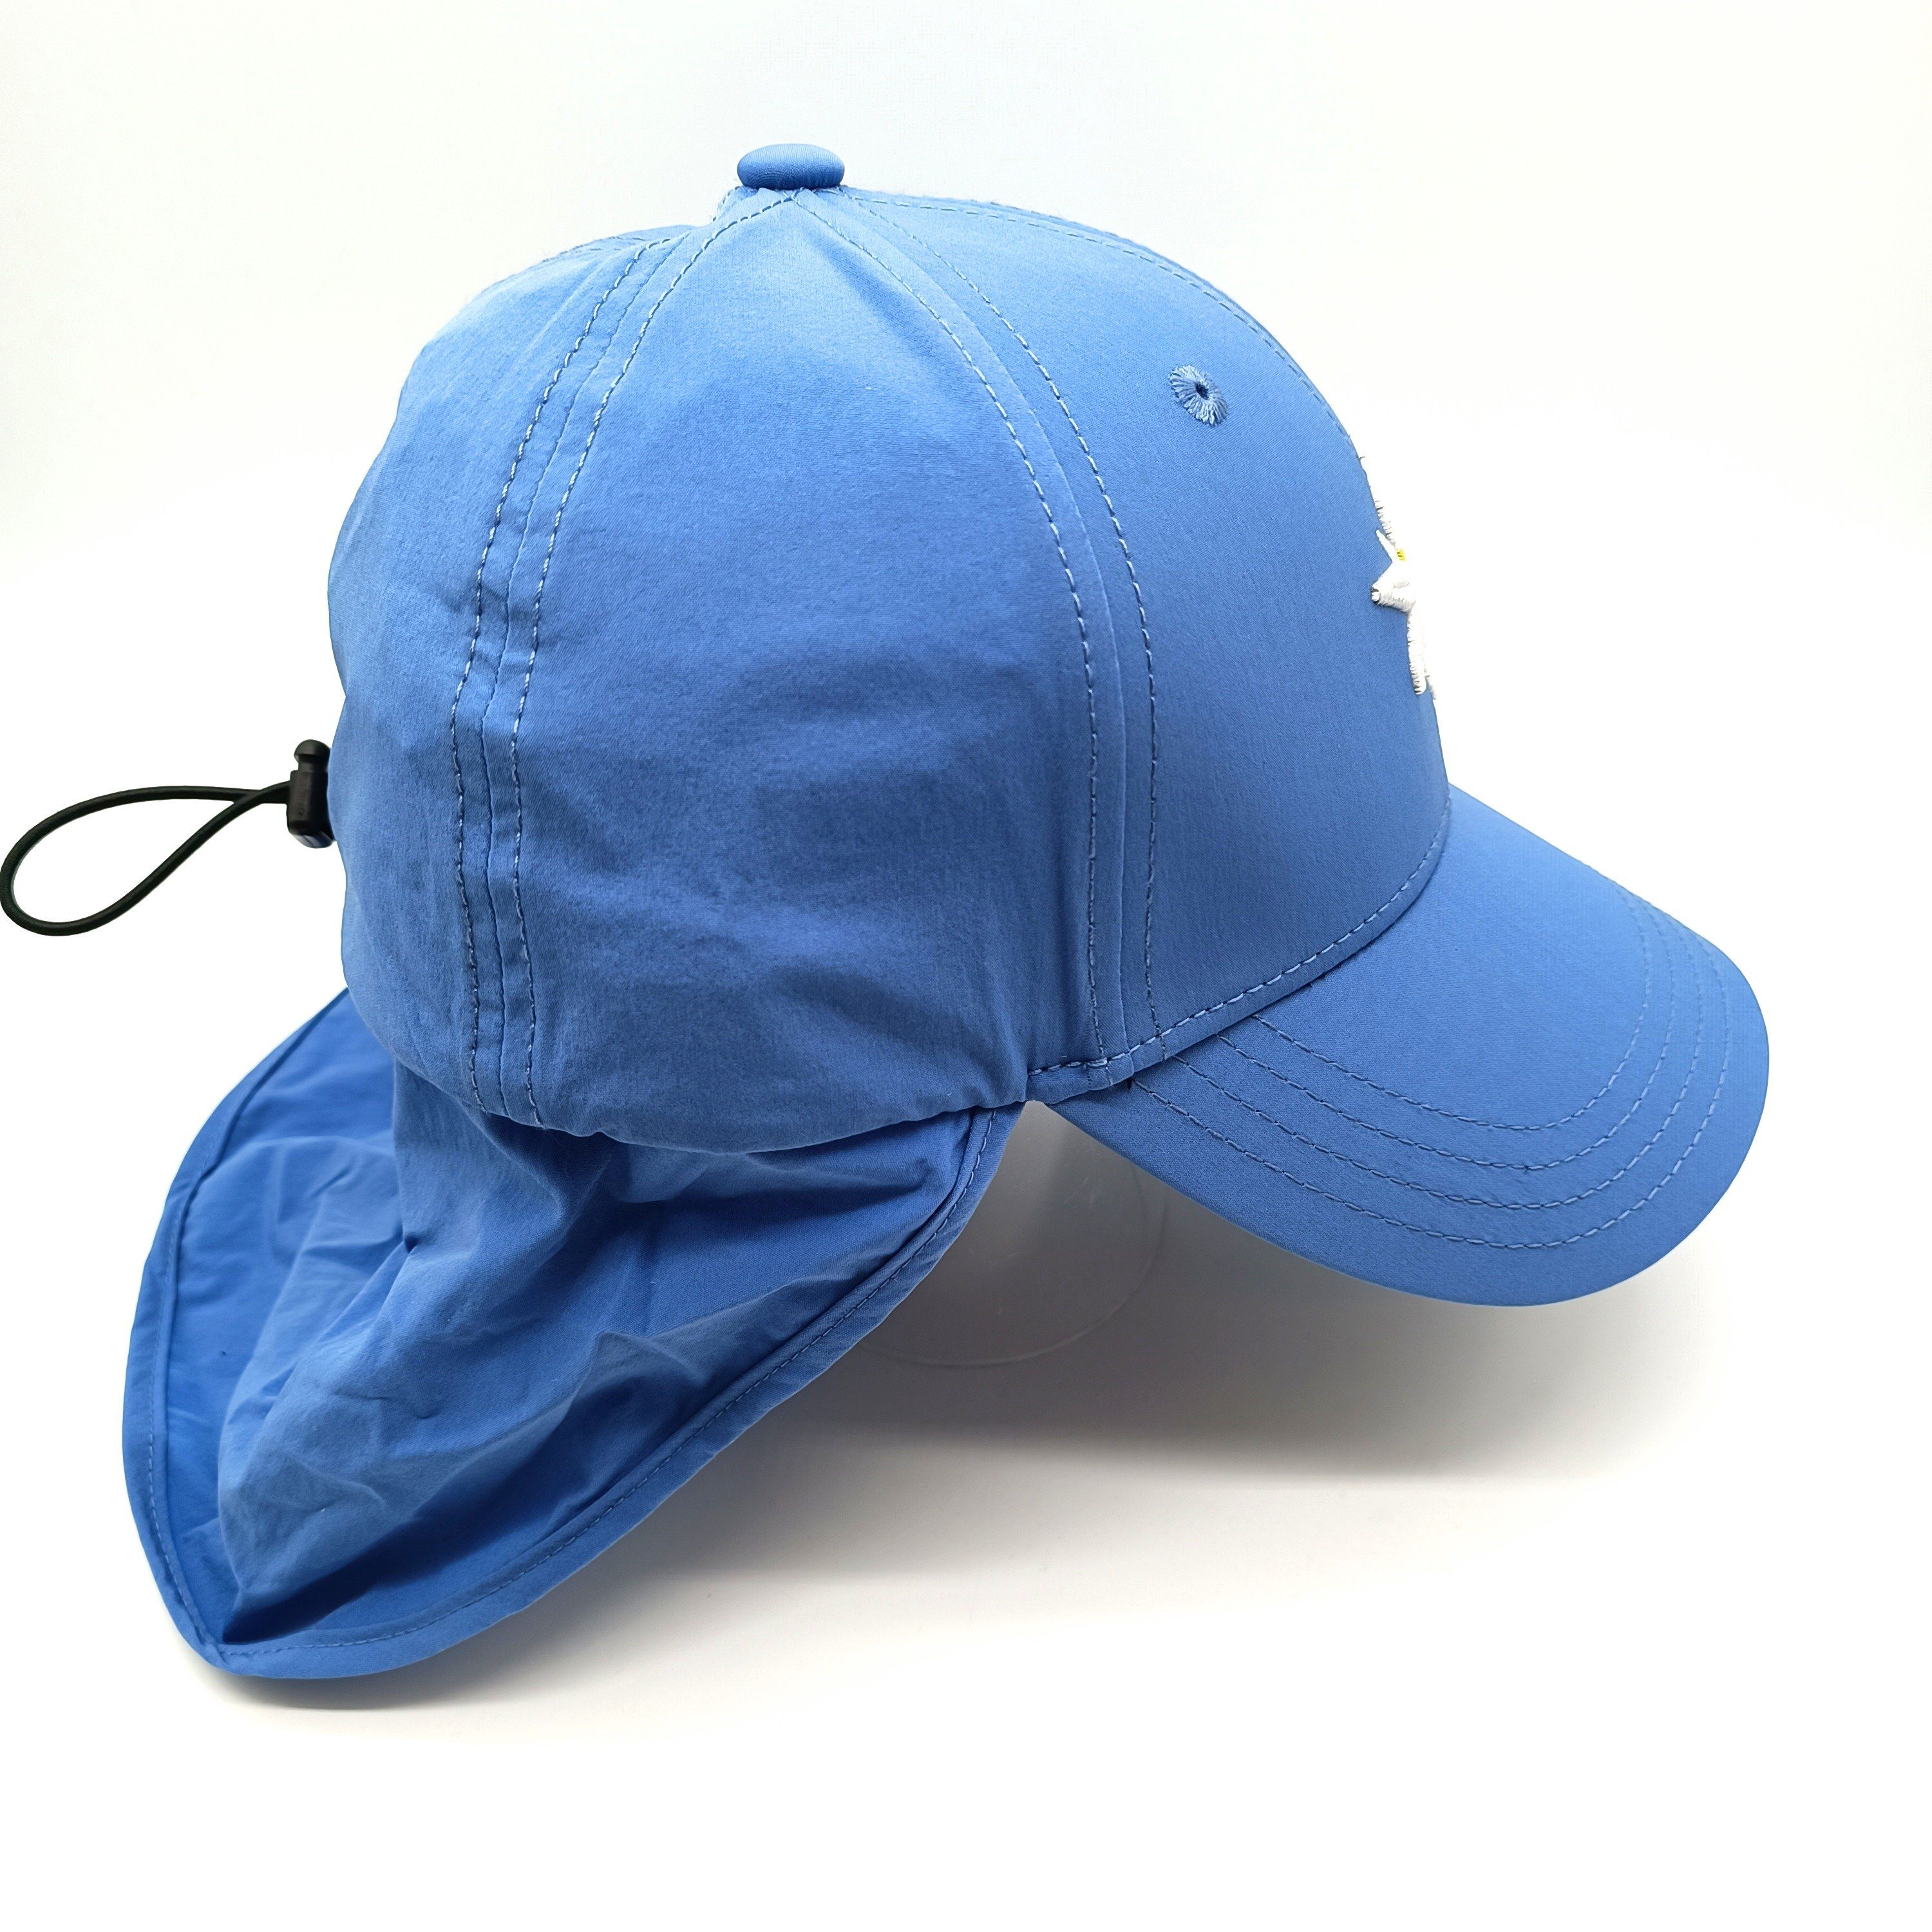 Edelweiß Baseball Nackenschutz Bavarian hellblau Caps Cap